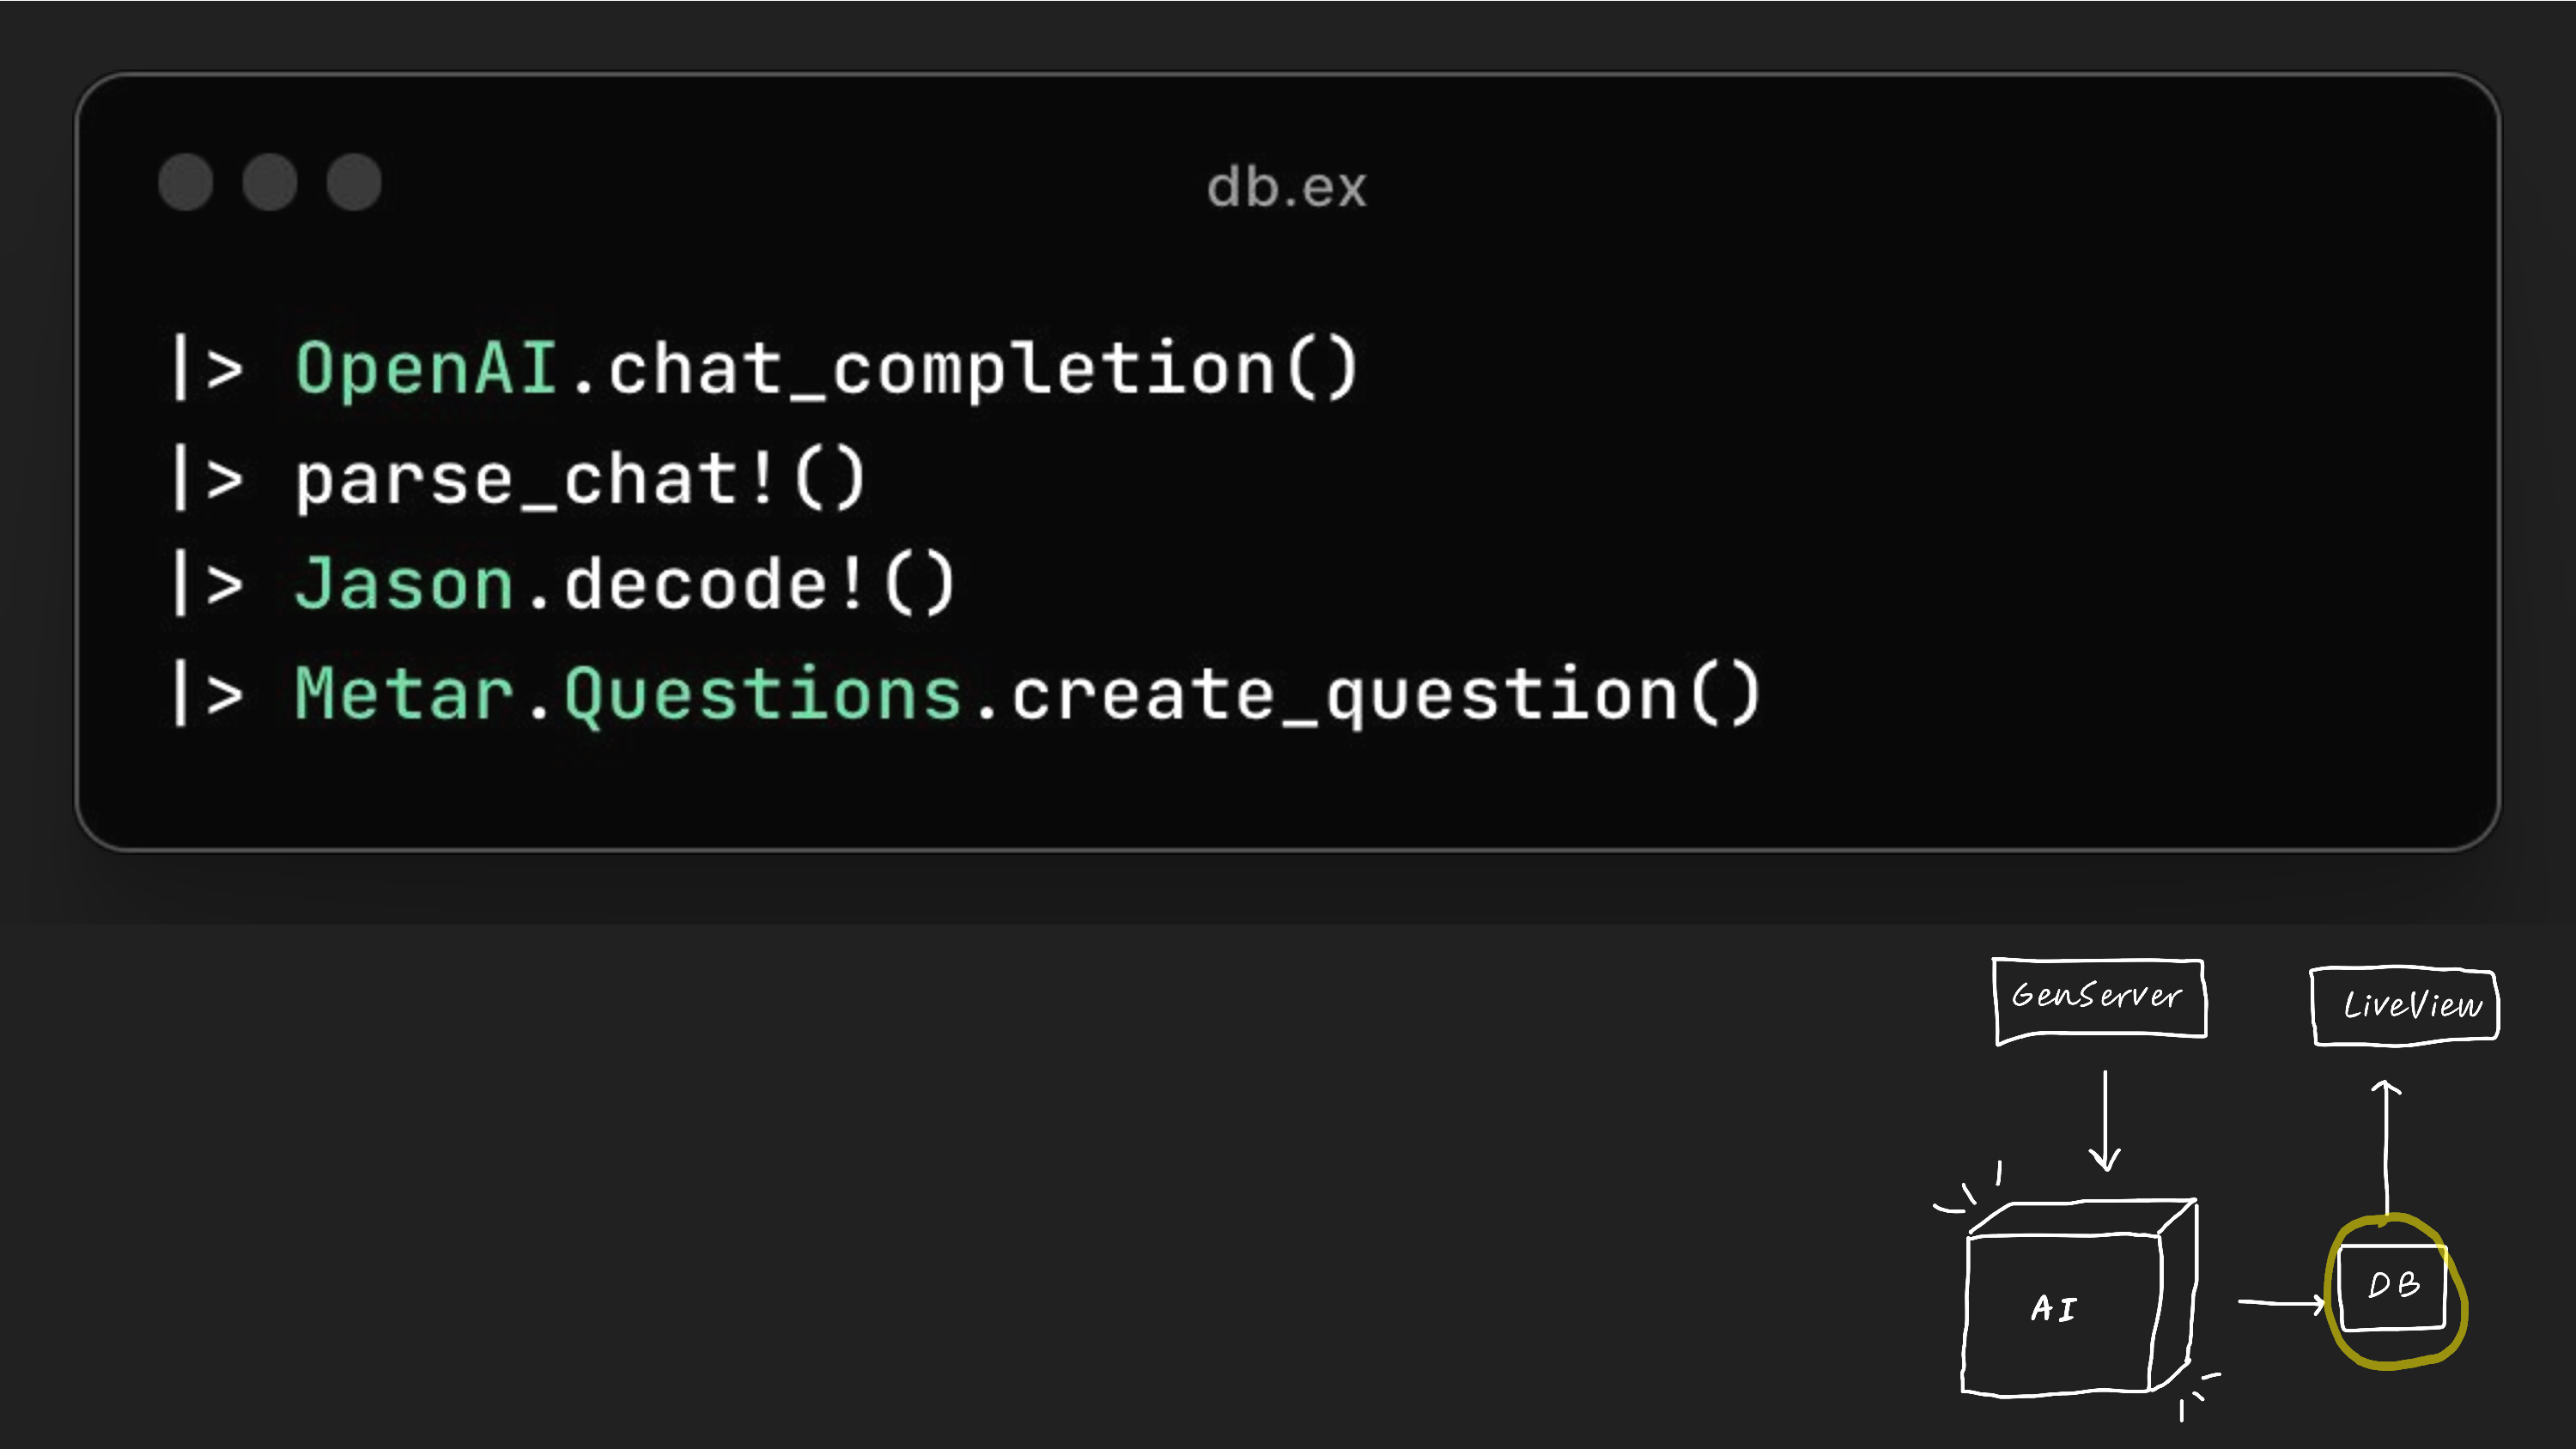 LR
|> OpenAI.chat_completion()
|> parse_chat!()
|> Jason.decode! ()
|> Metar.Questions.create_question()
= l
aRC
&
